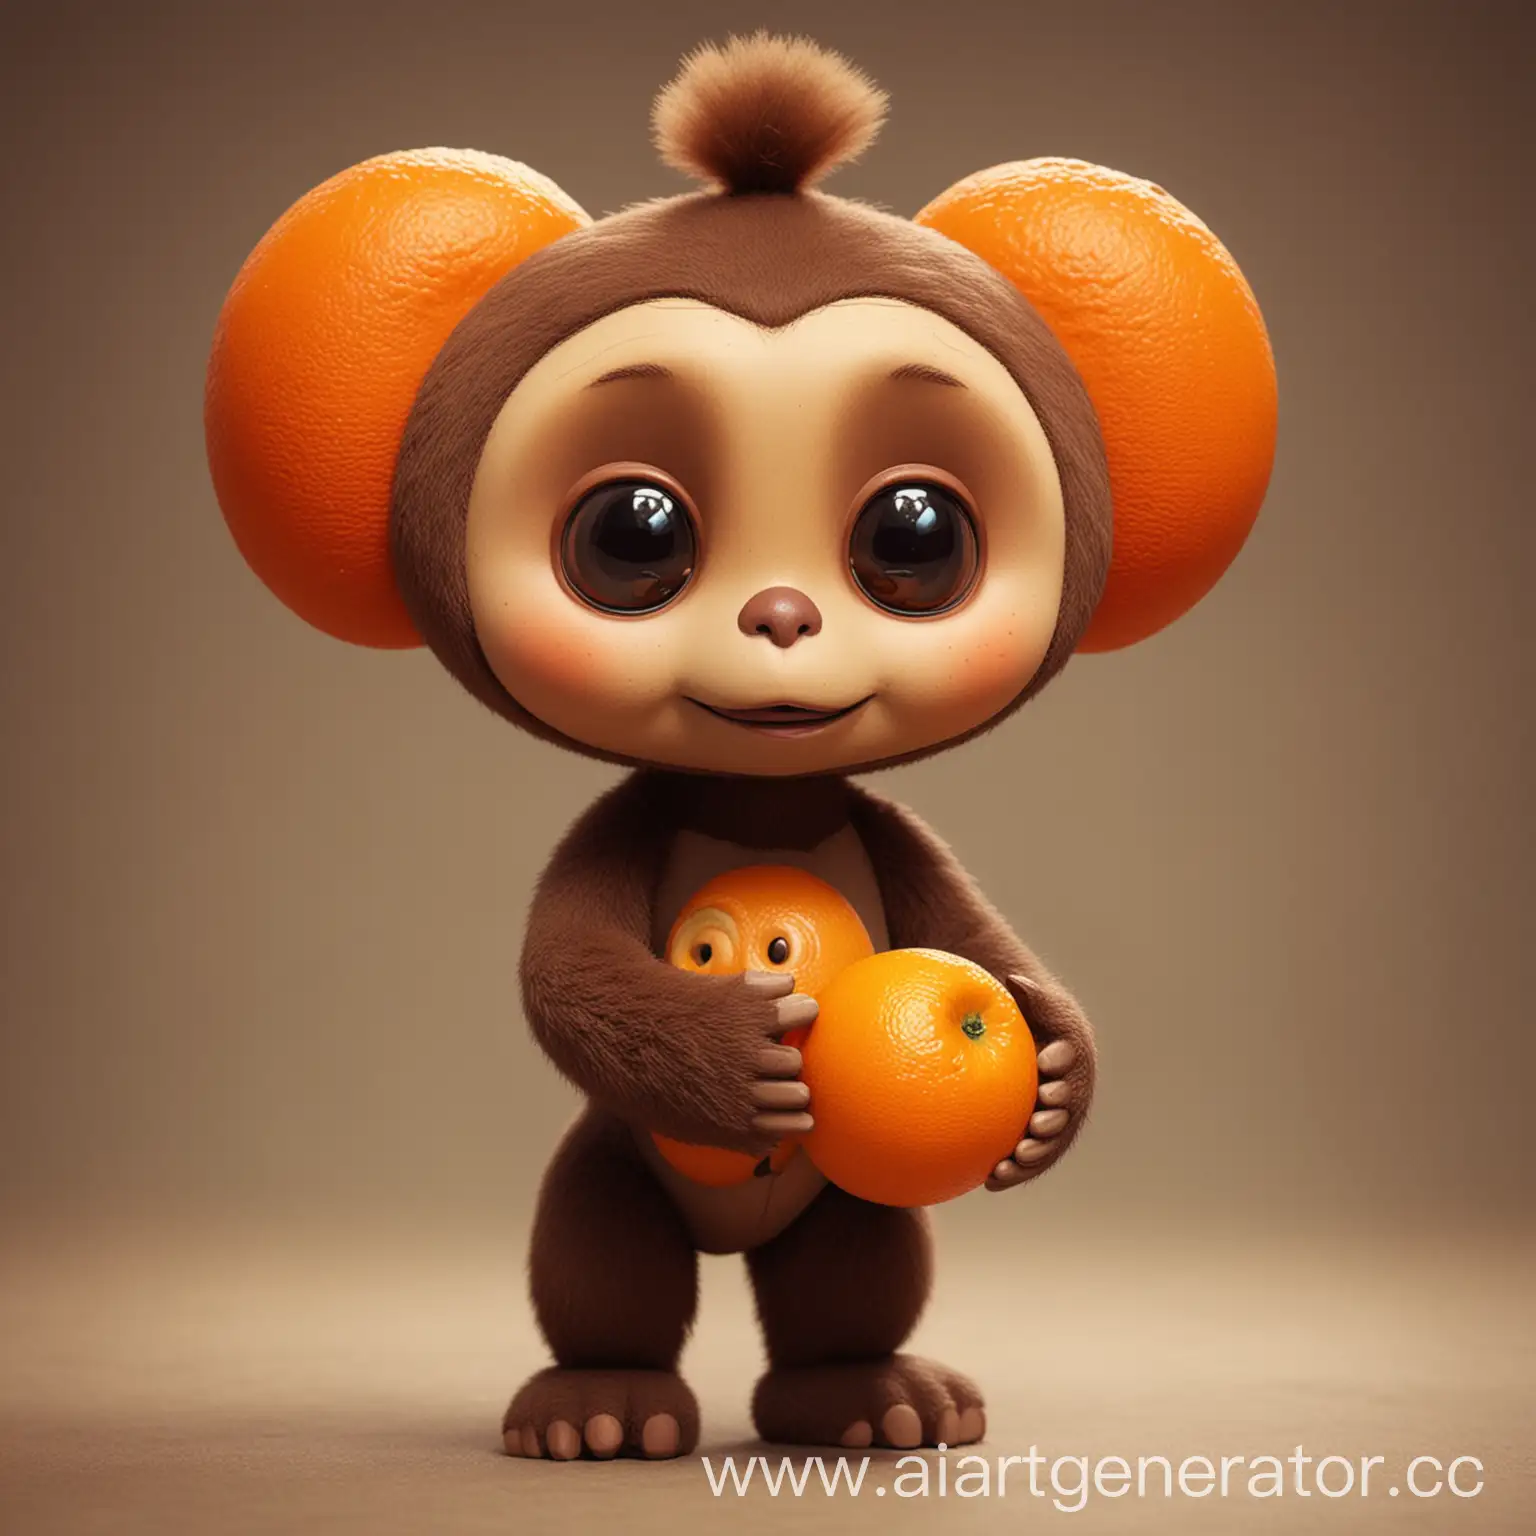 Cheburashka-Cartoon-Character-Holding-an-Orange